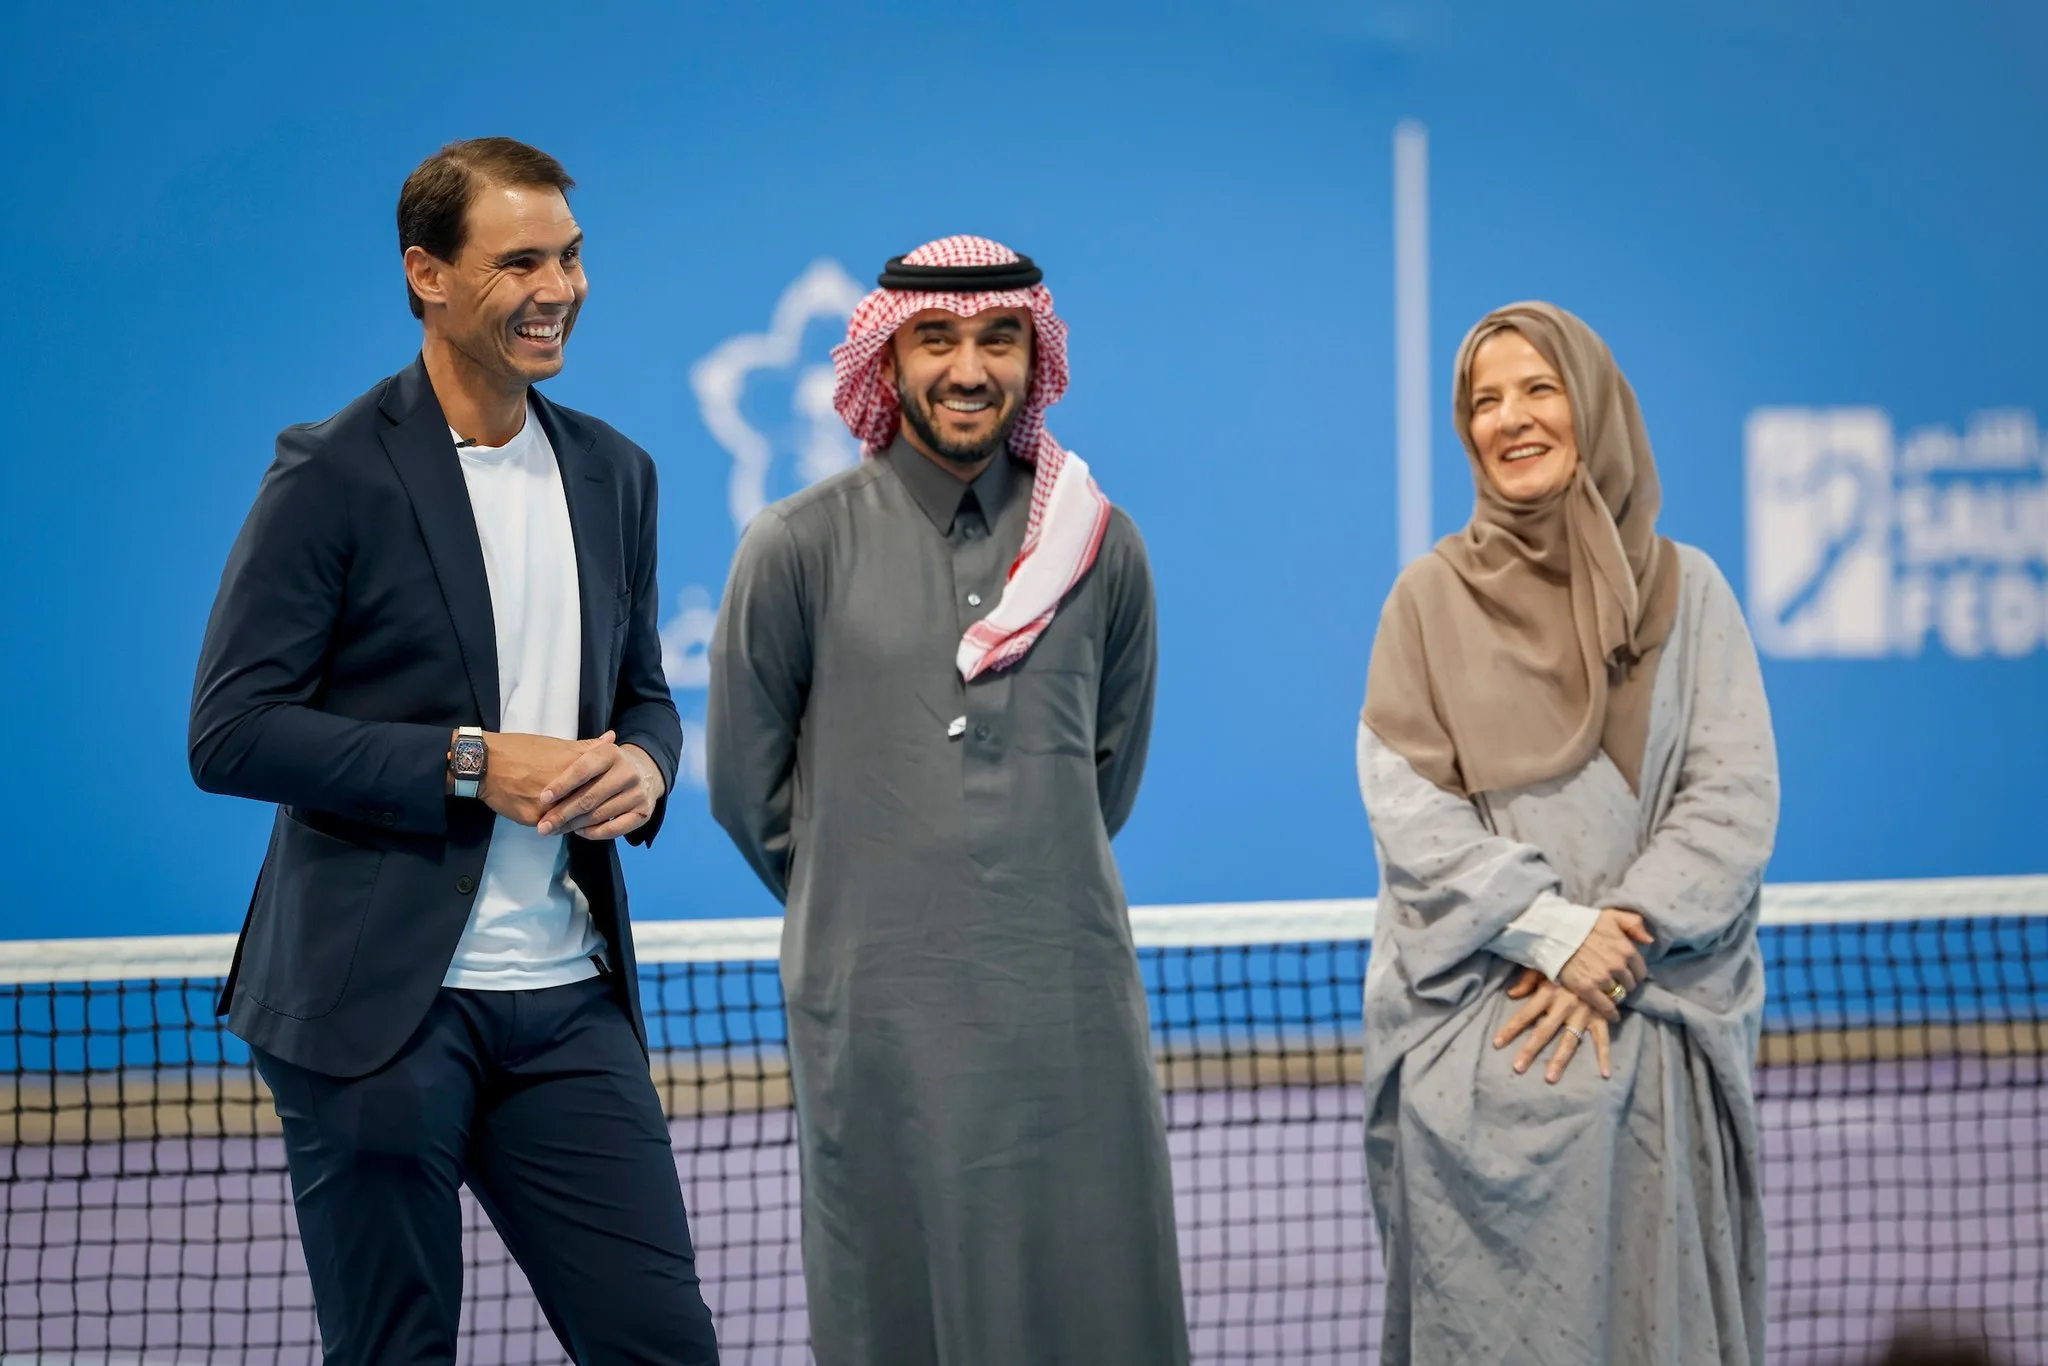 Nadal and the Saudis?